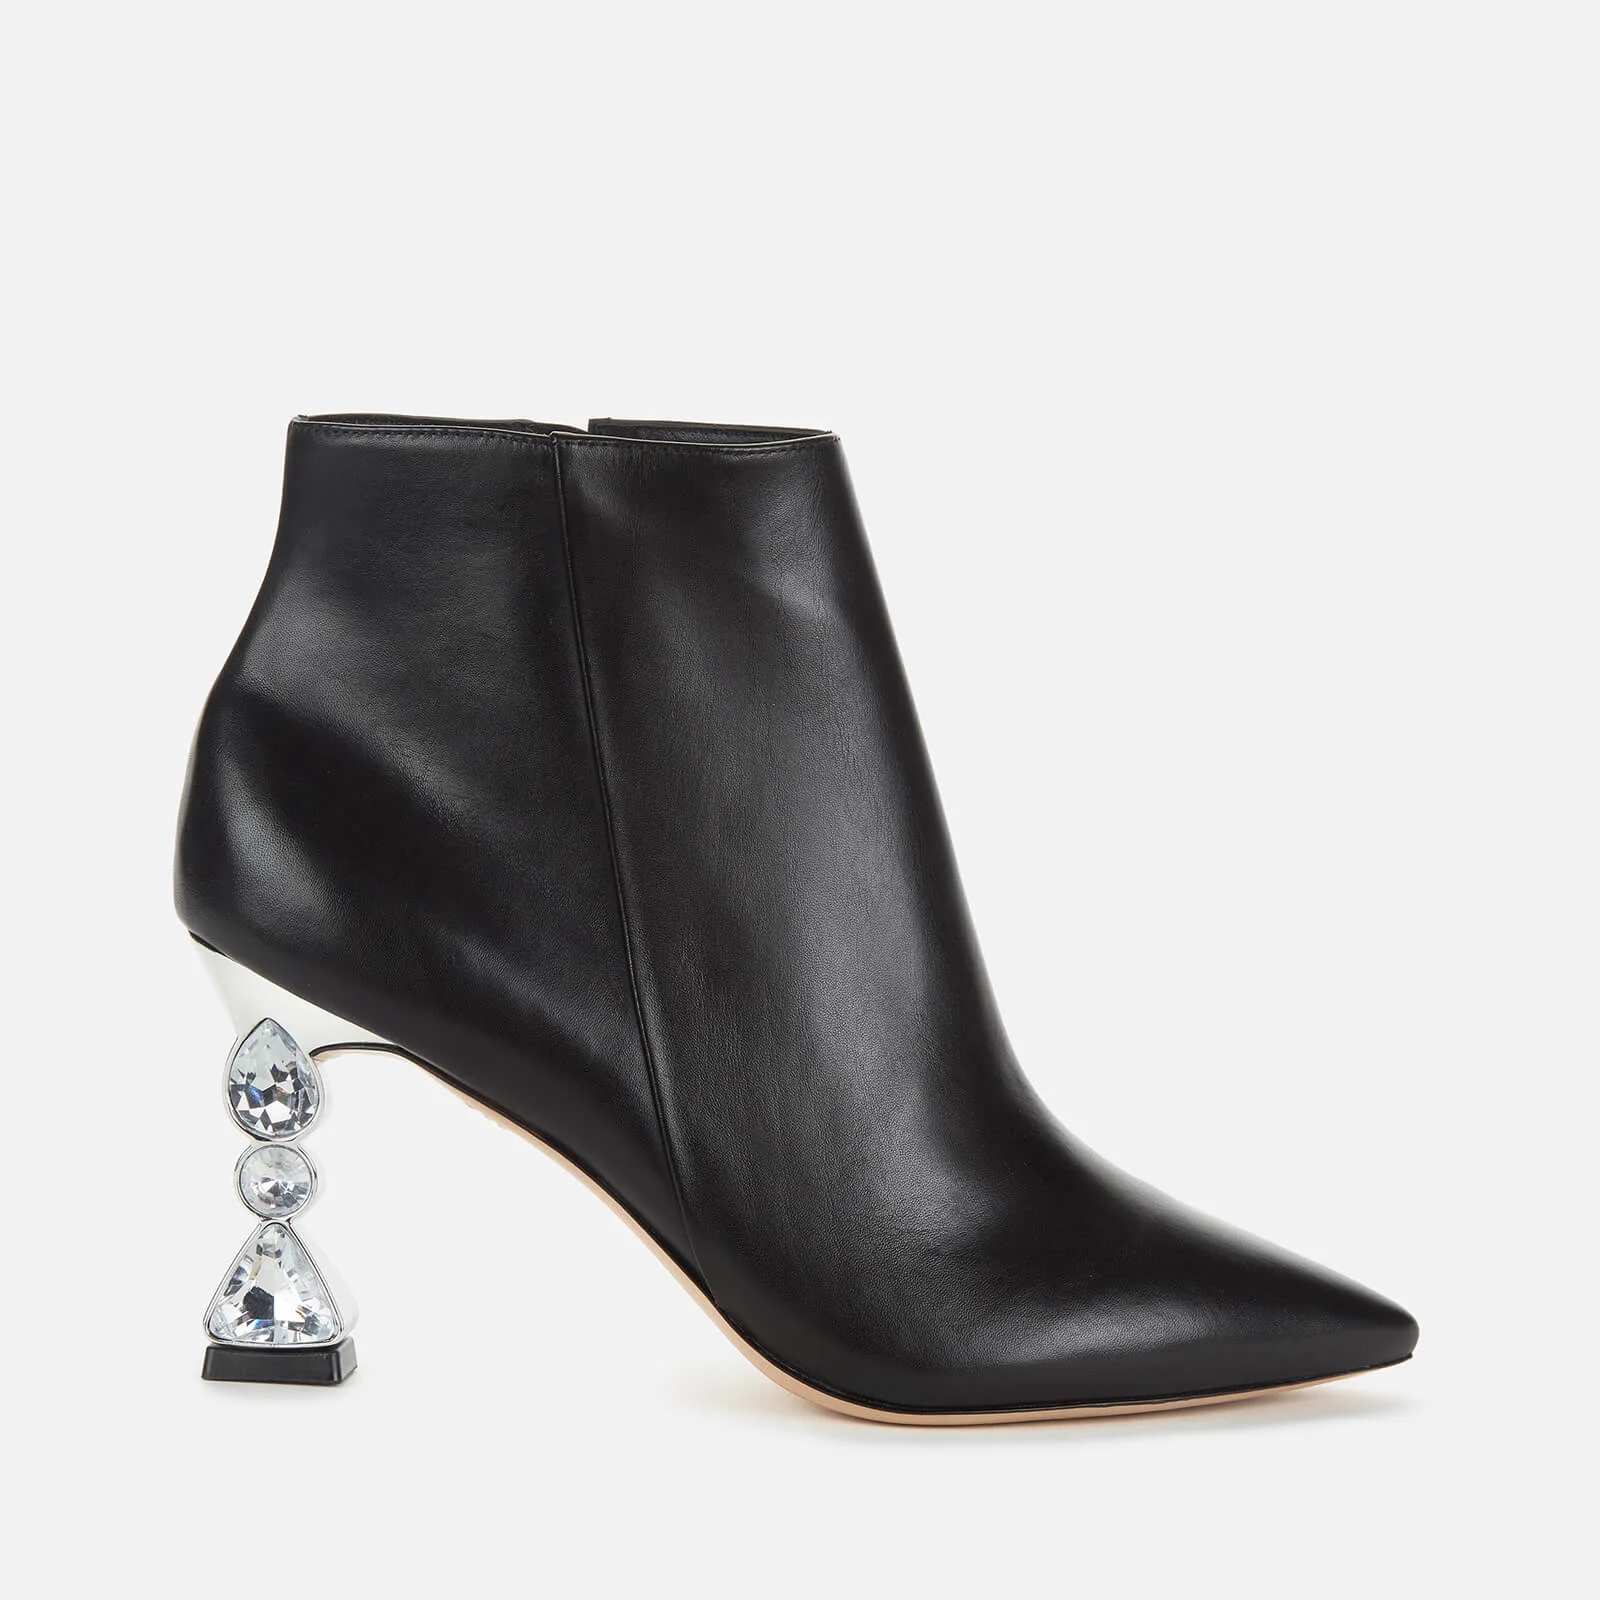 Sophia Webster Women's Bijou Leather Heeled Ankle Boots - Black/Silver Image 1